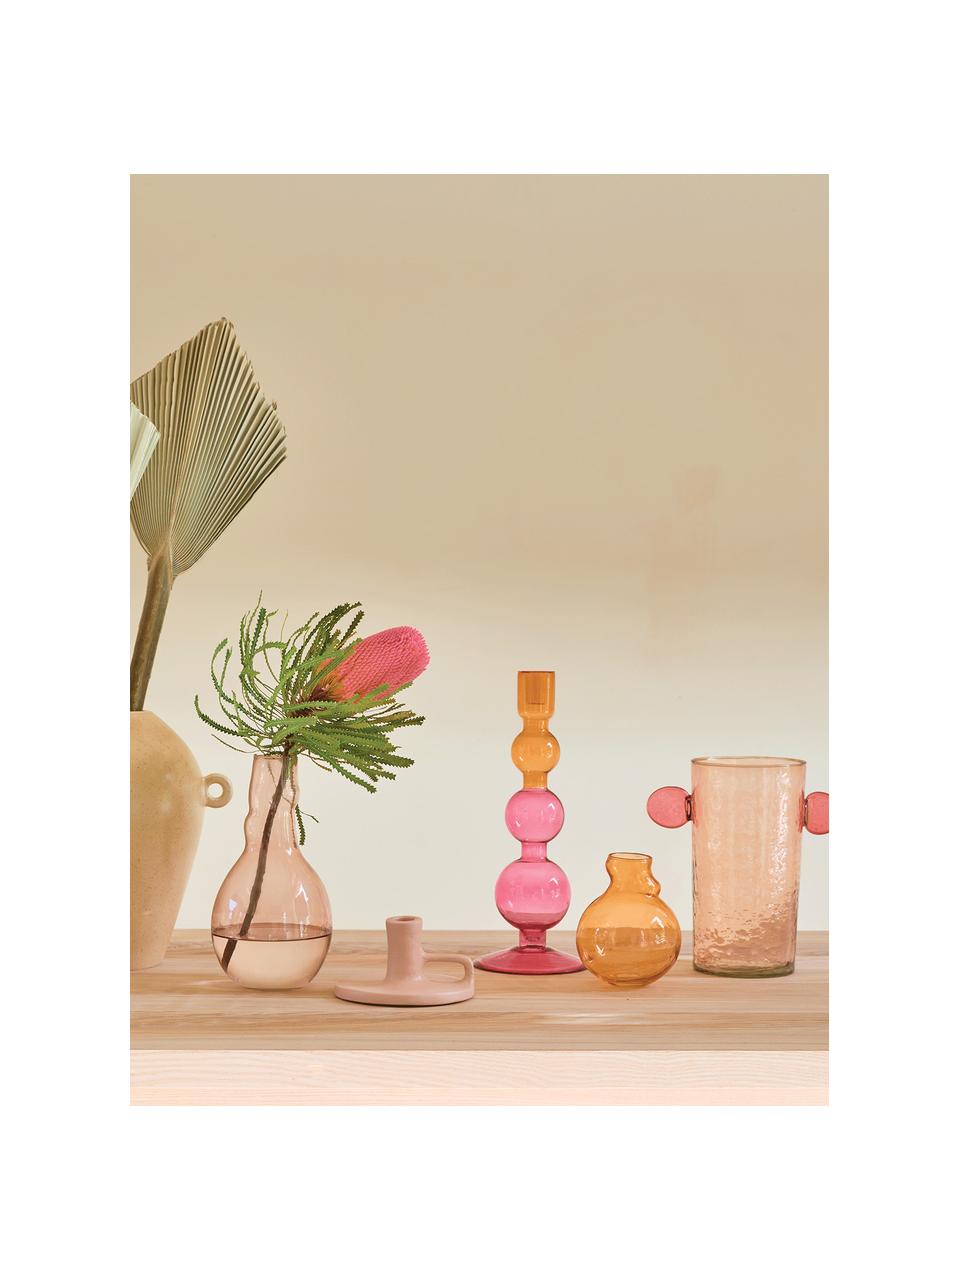 Kandelaar Bulb in roze/oranje, Gerecycled glas, Roze, oranje, Ø 13 x H 36 cm